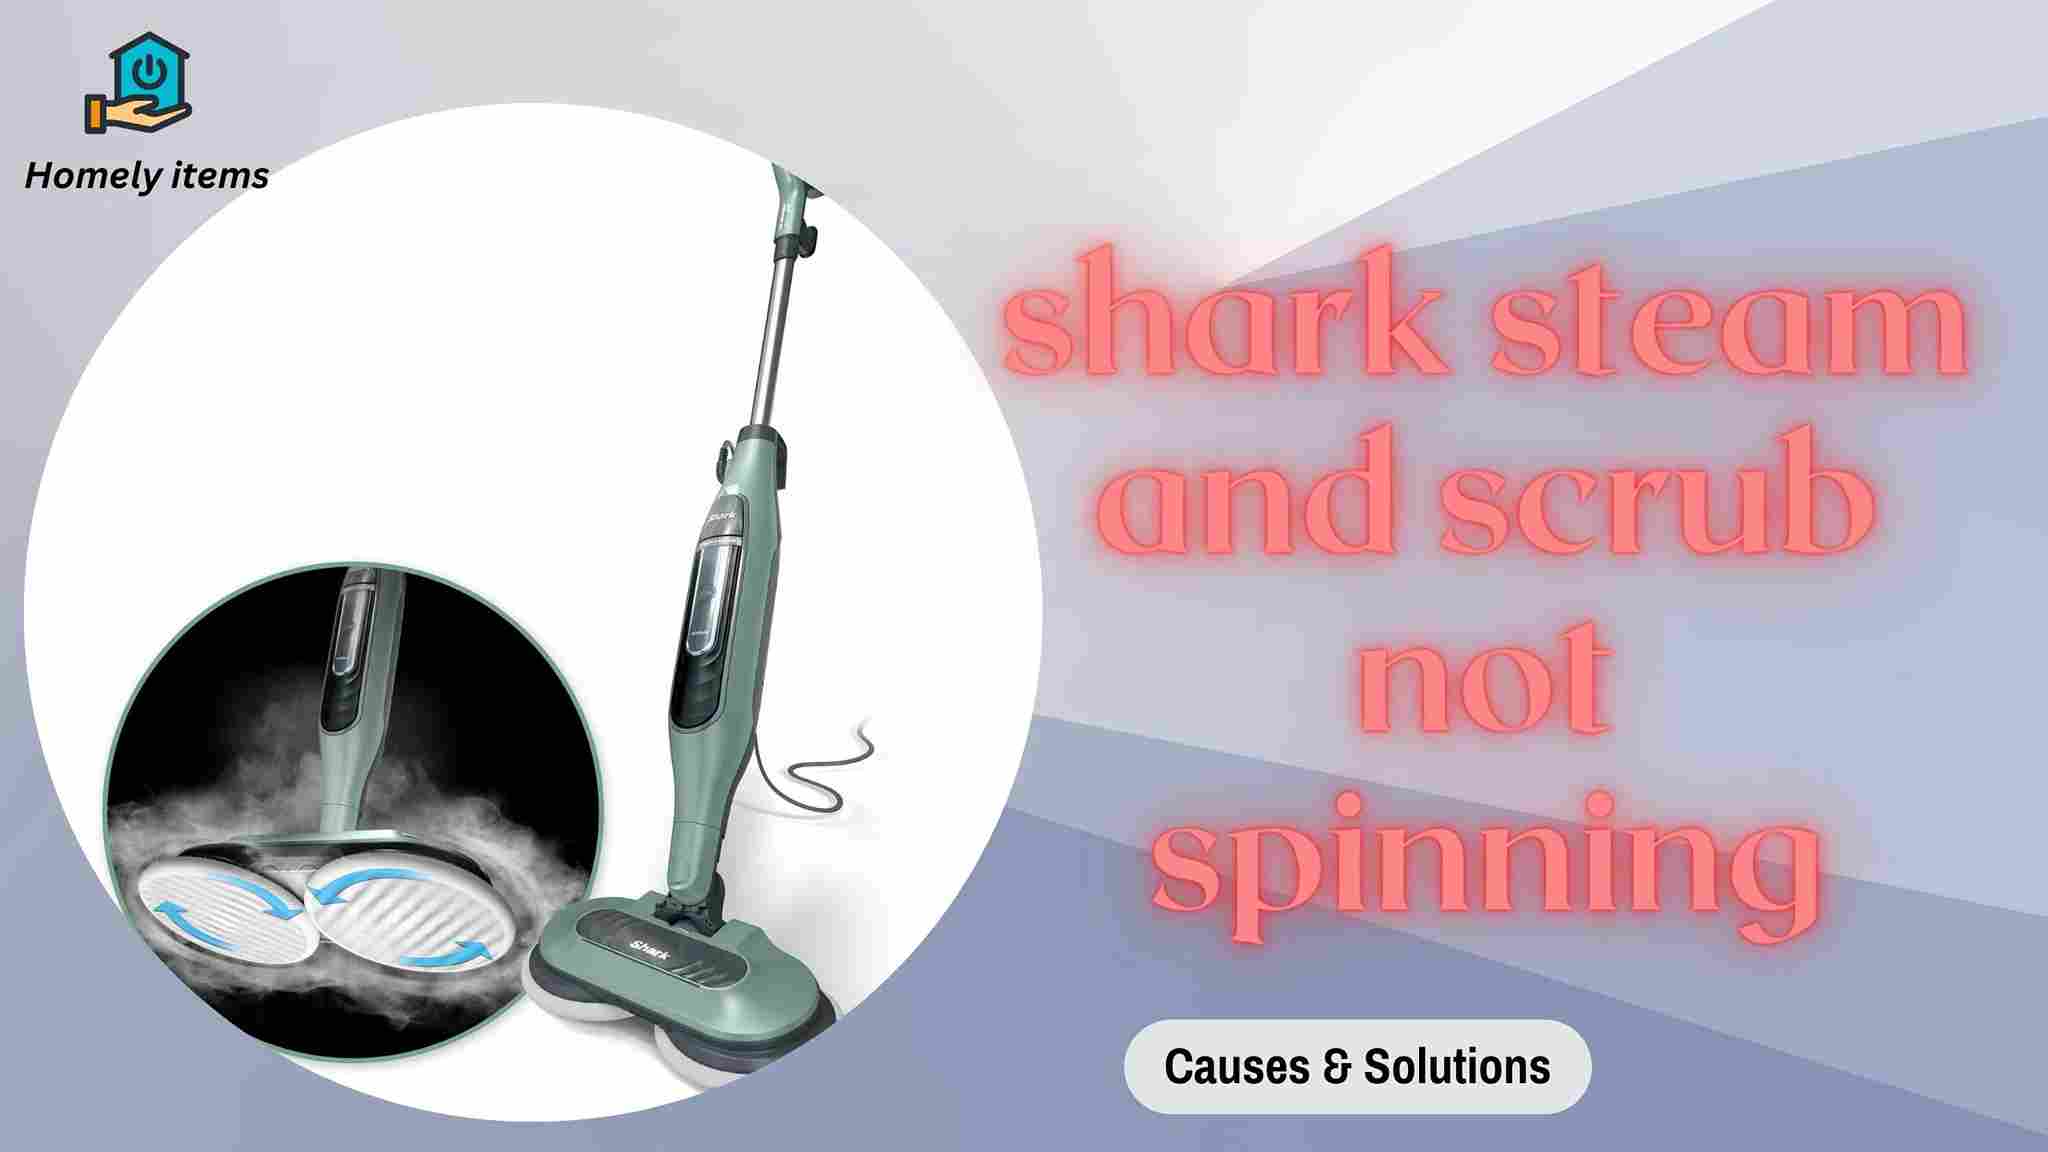 shark steam and scrub not spinning